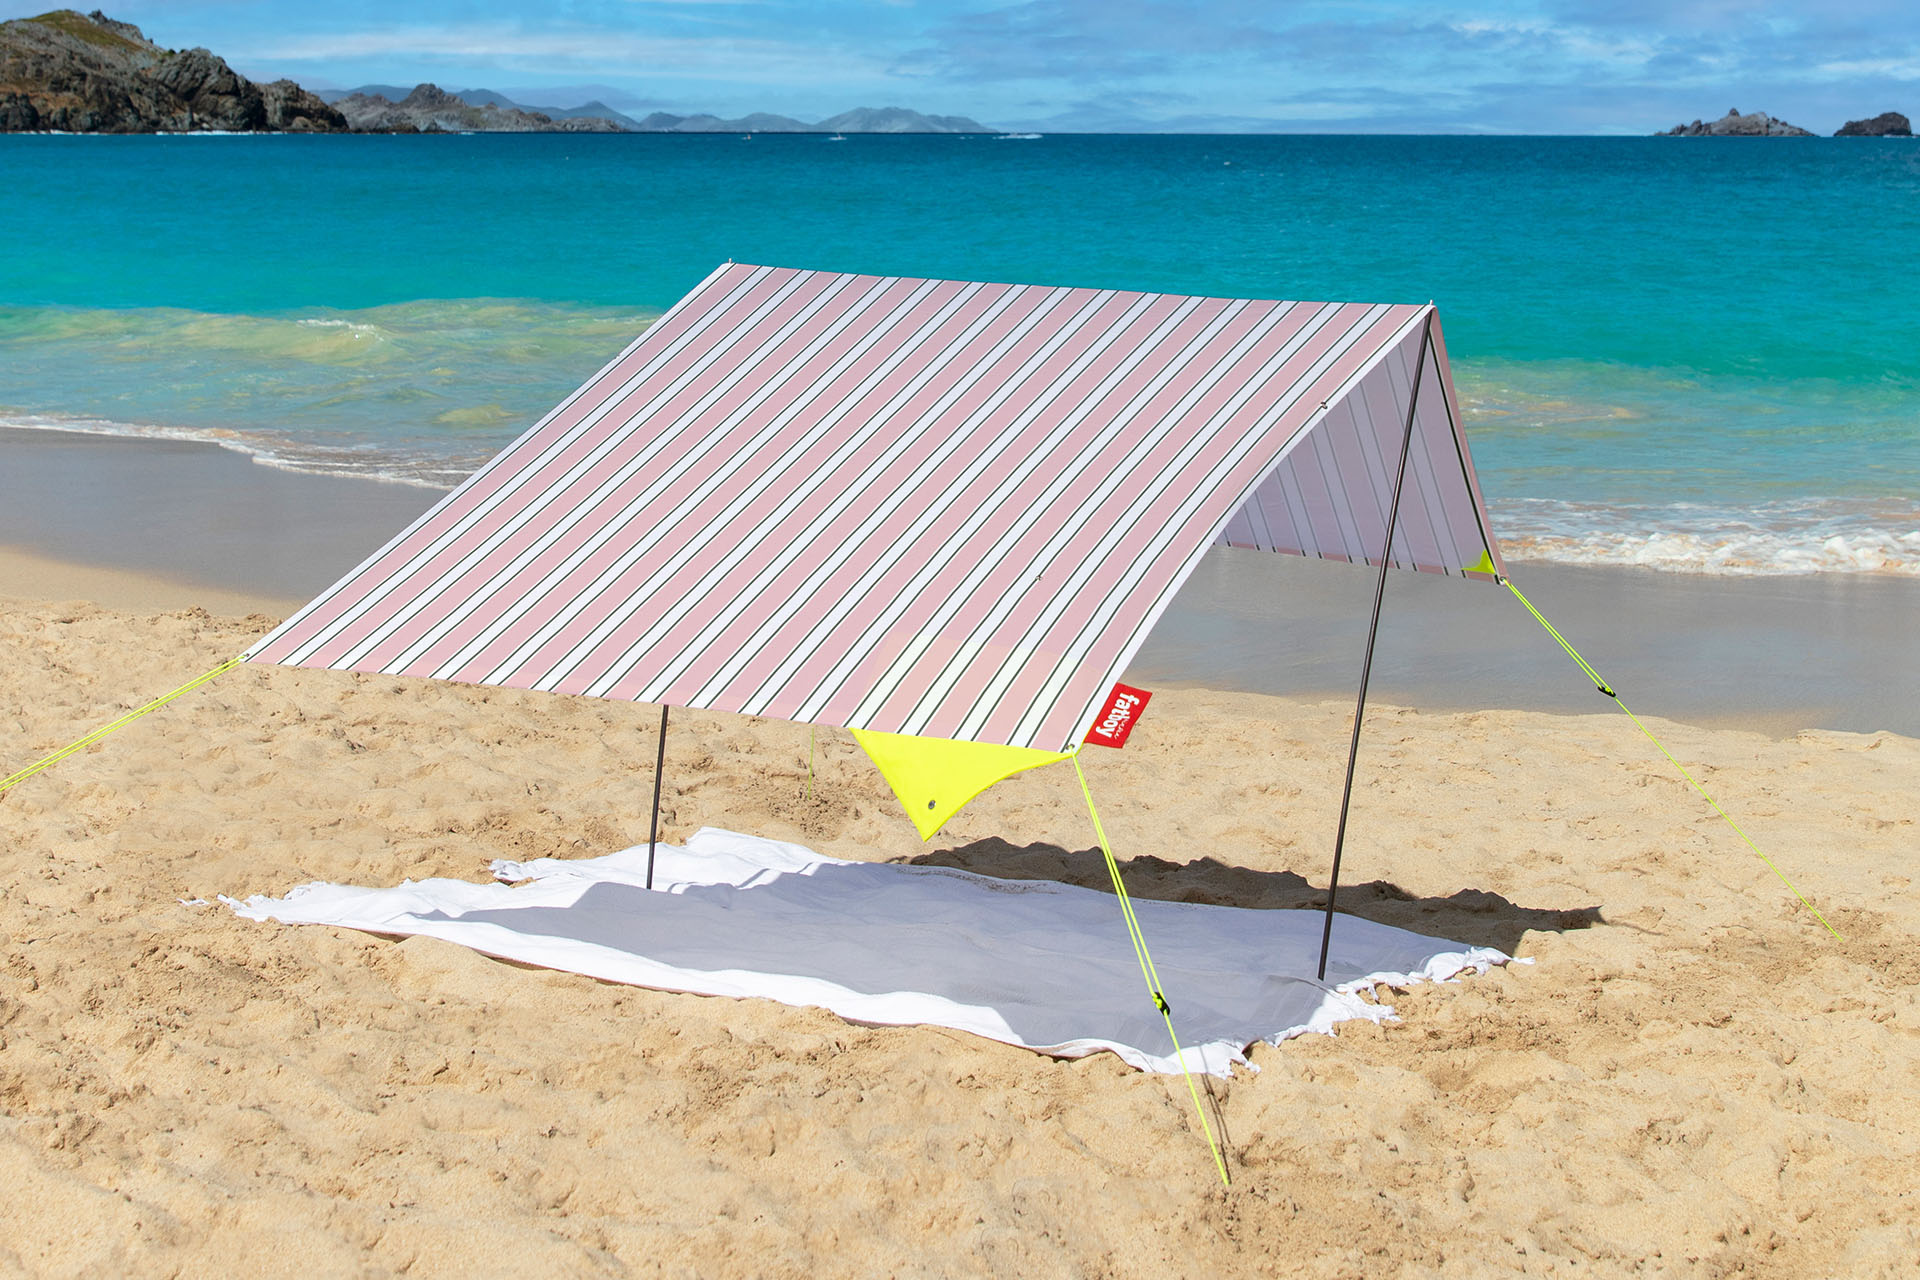 Miasun: the portable beach tent for some shade